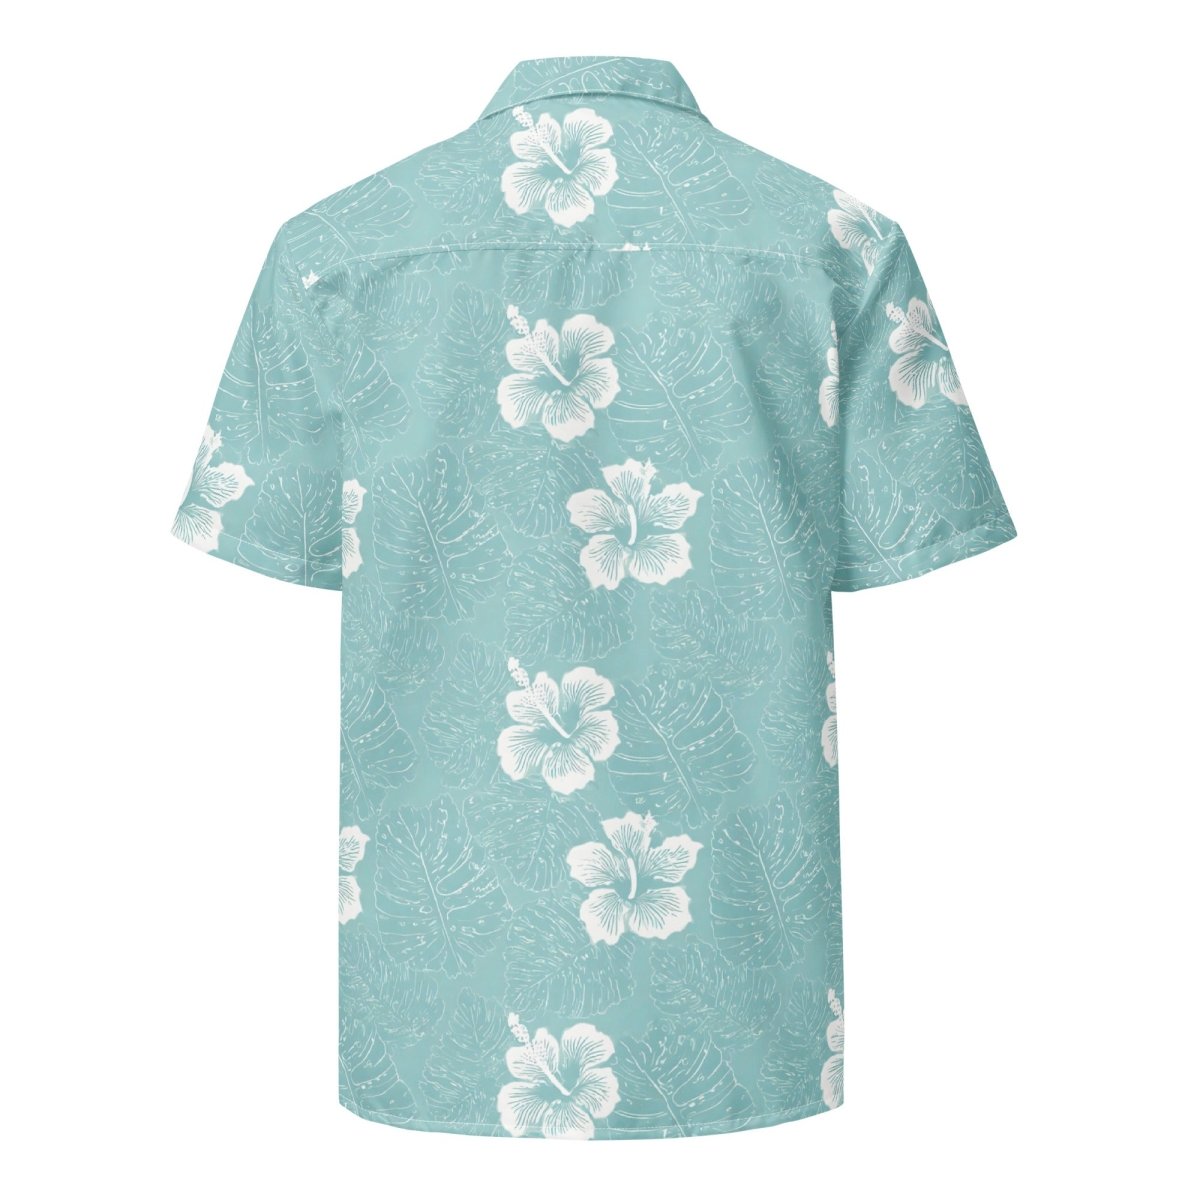 Kailua Shadows - Hawaiian Shirt - The Tiki Yard - Men's Hawaiian Shirt